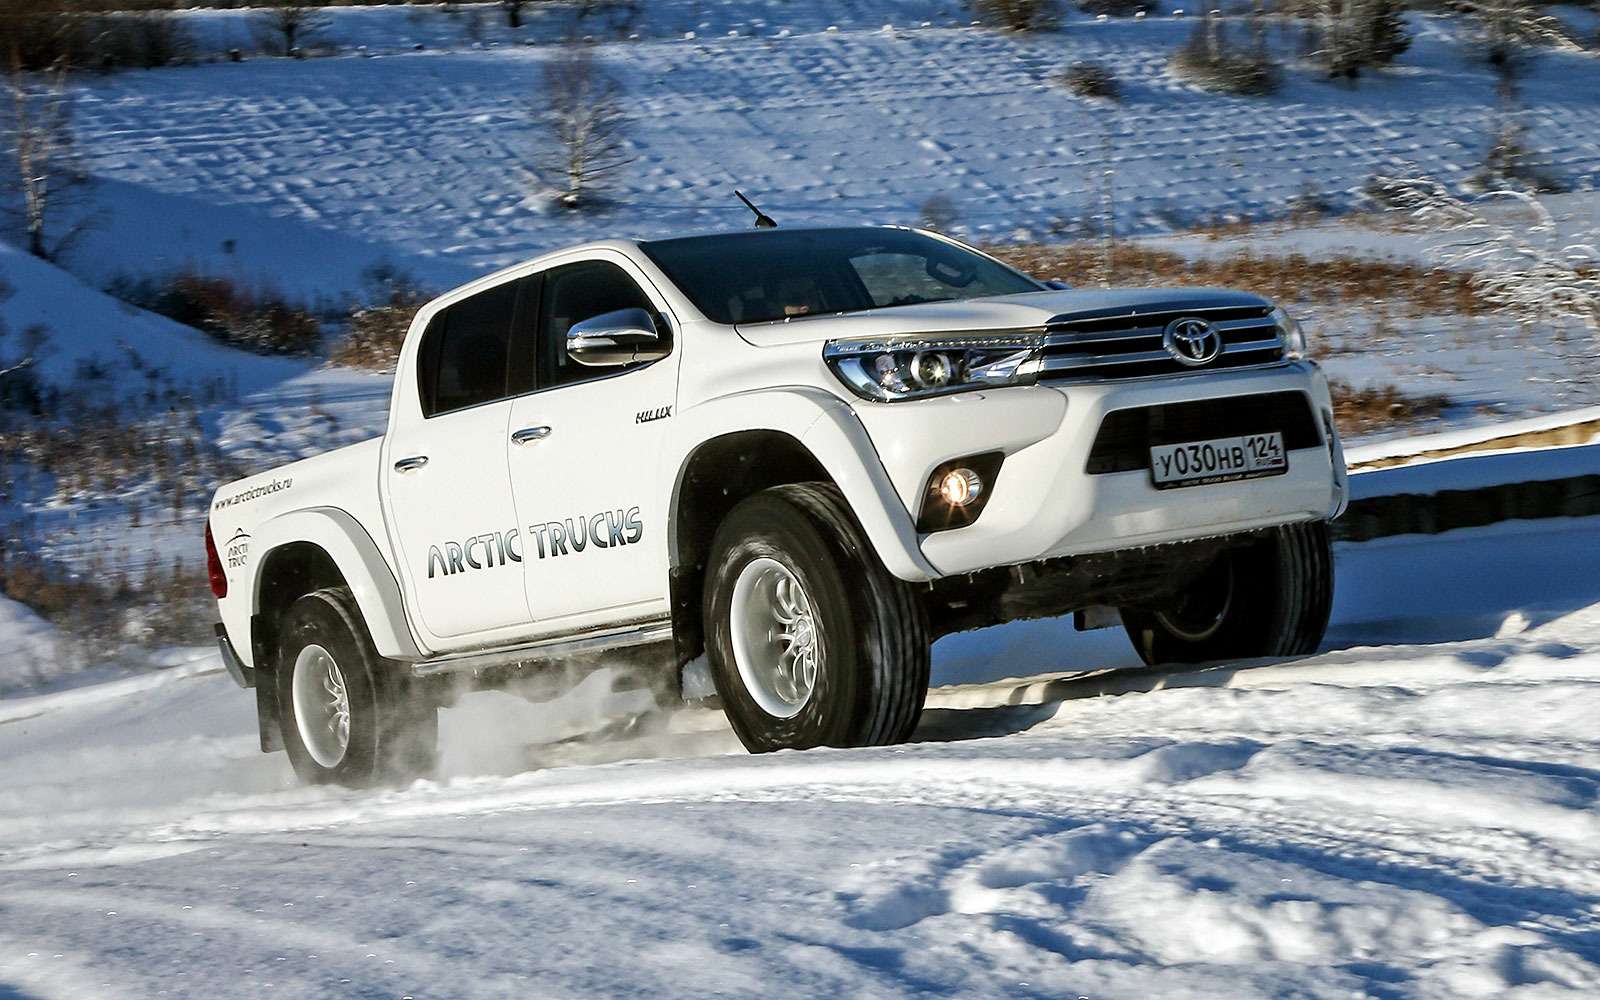 Toyota Hilux Arctic Trucks AT35 6X6